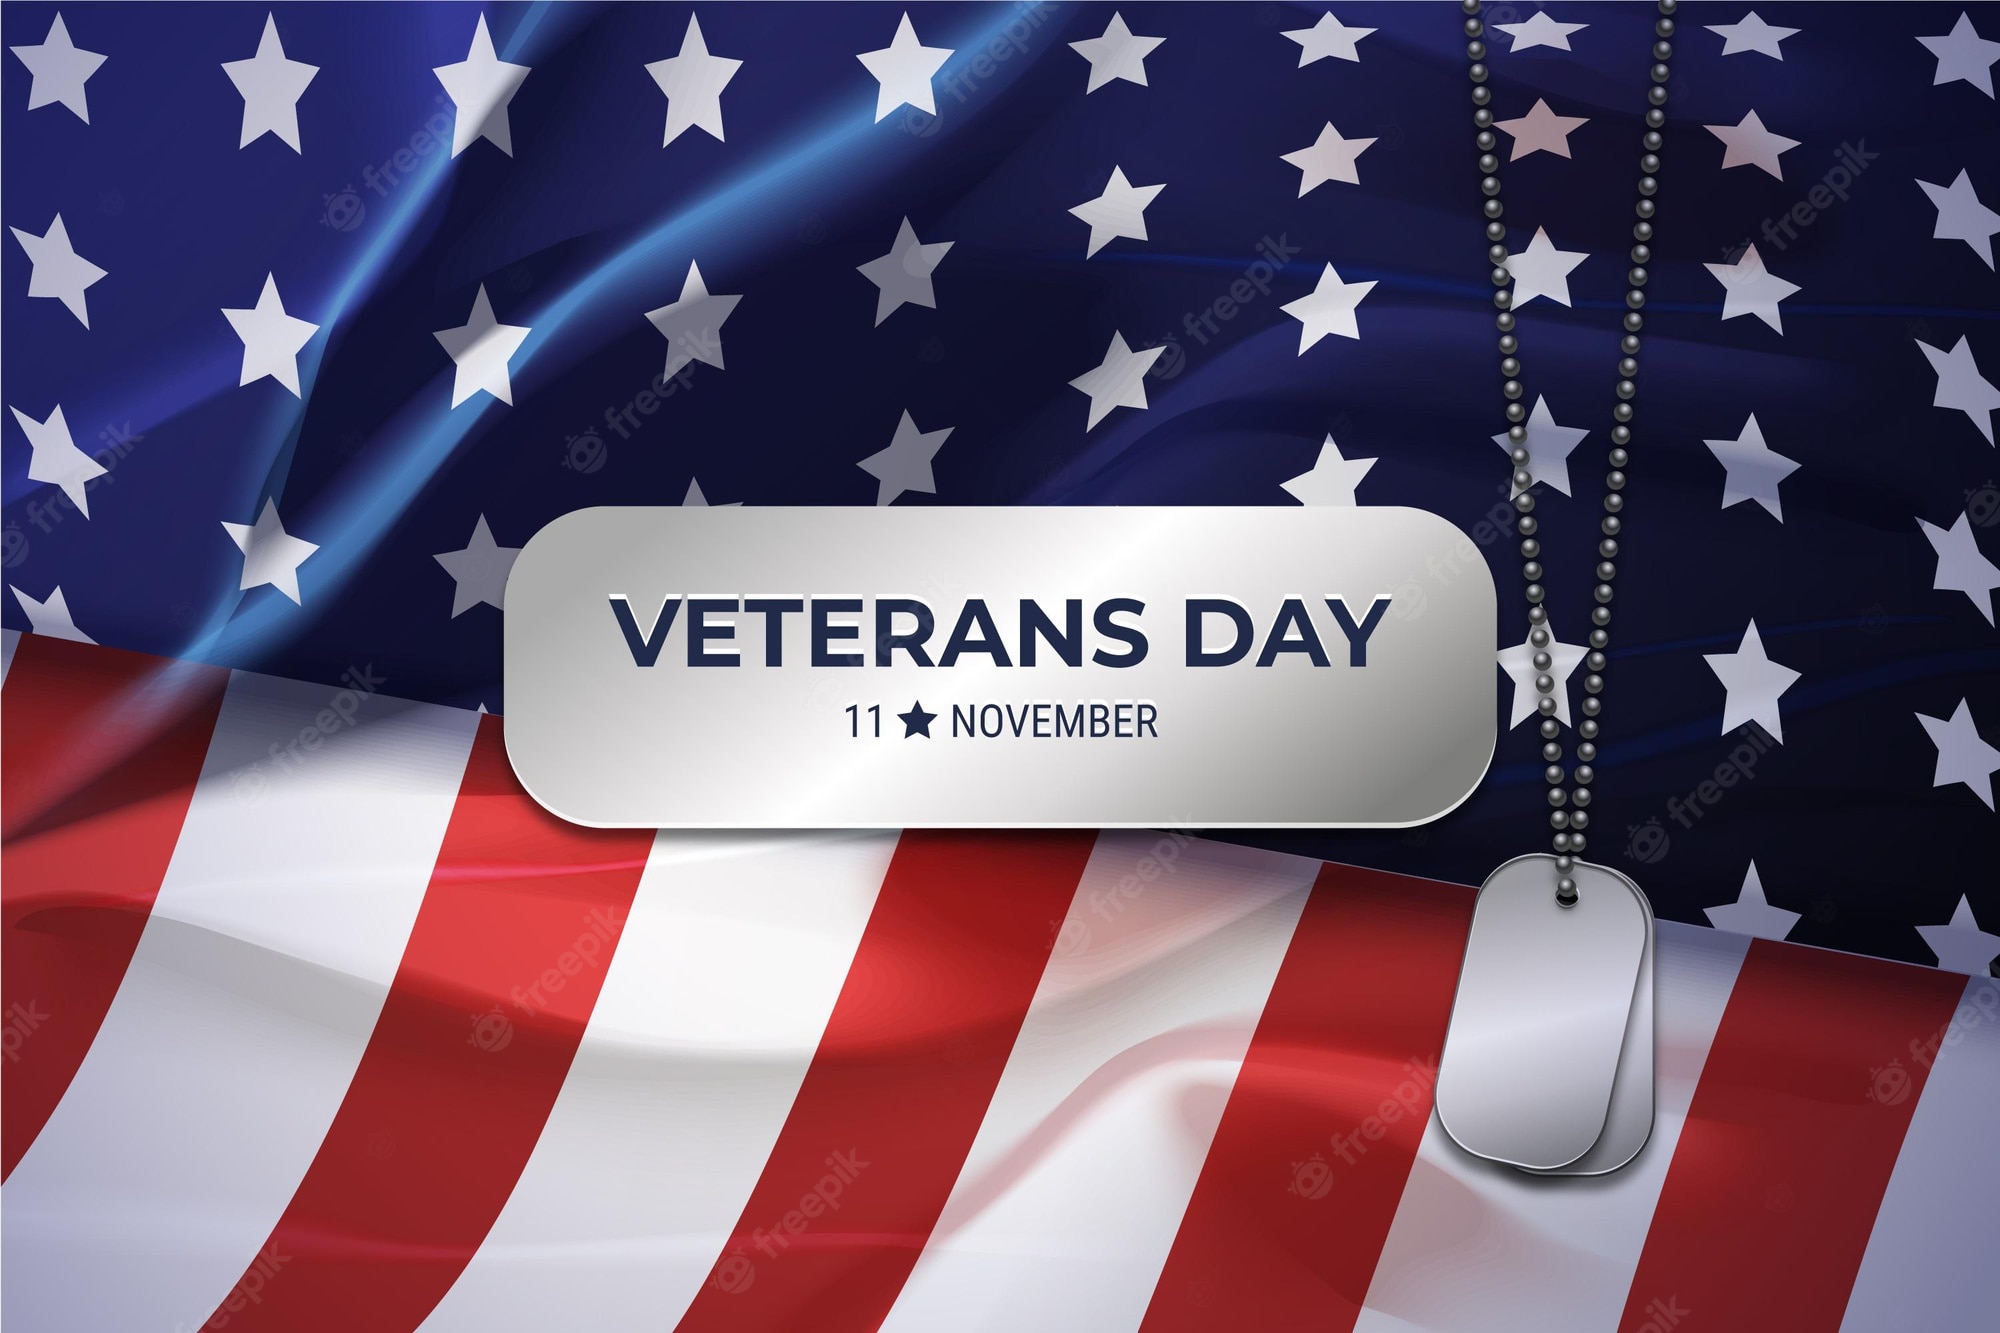 Veterans day Image. Free Vectors, & PSD